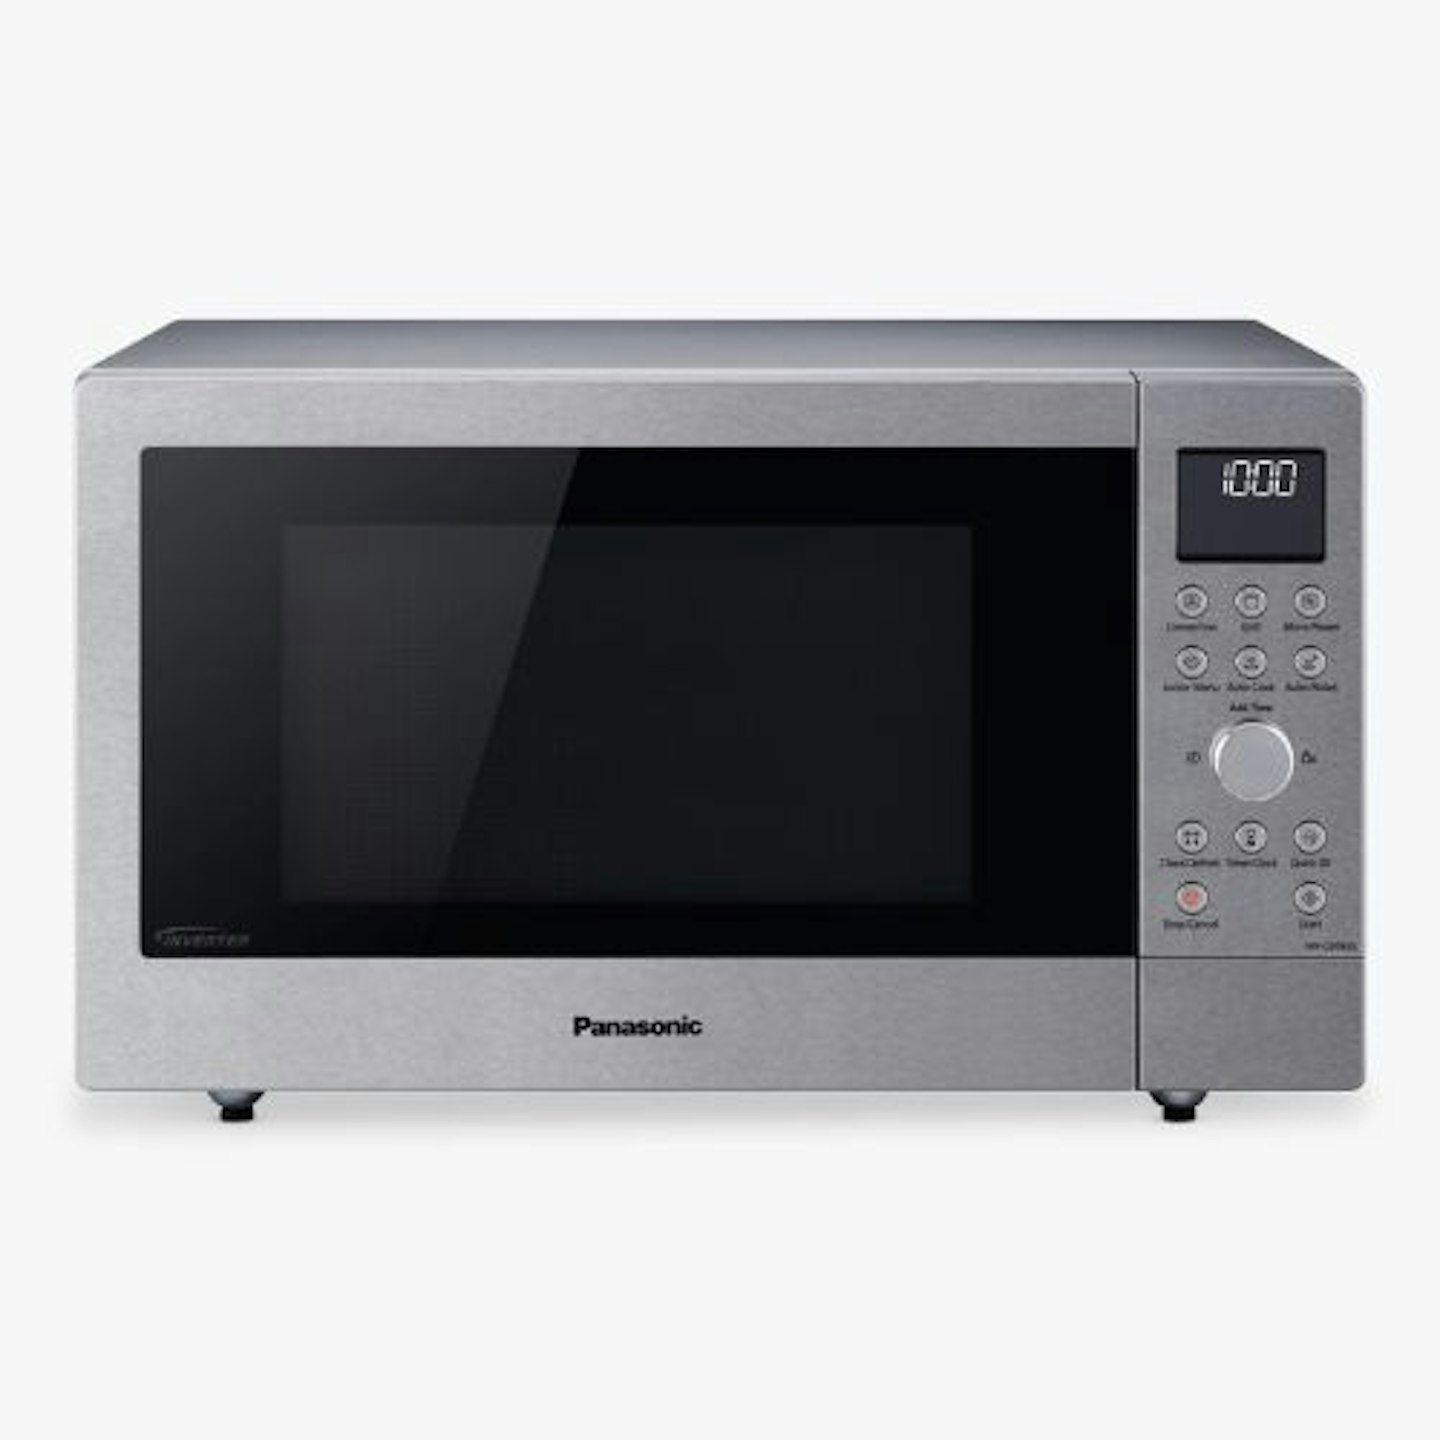 NN-CD58JSBPQ 27 Litre Combination Microwave Oven